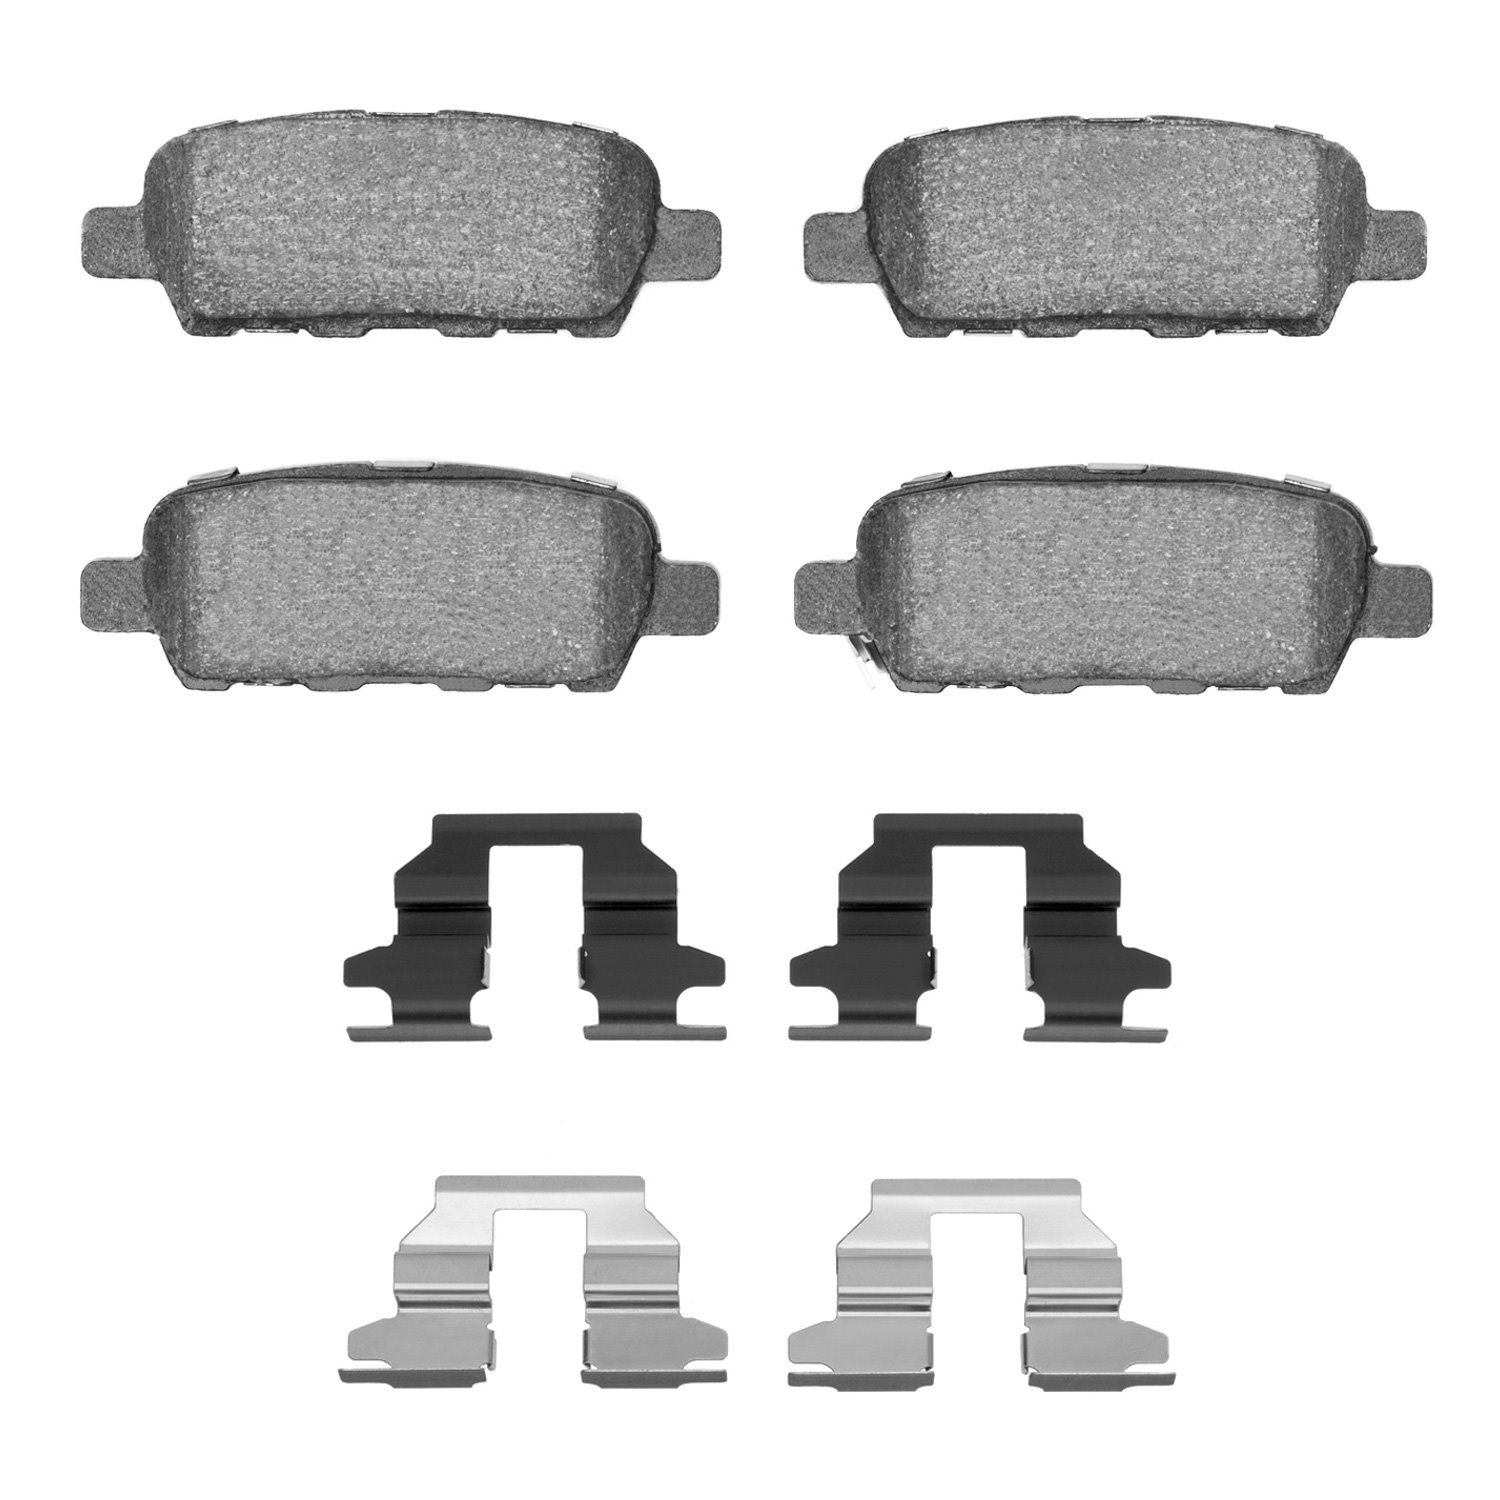 1310-0905-01 3000-Series Ceramic Brake Pads & Hardware Kit, Fits Select Multiple Makes/Models, Position: Rear